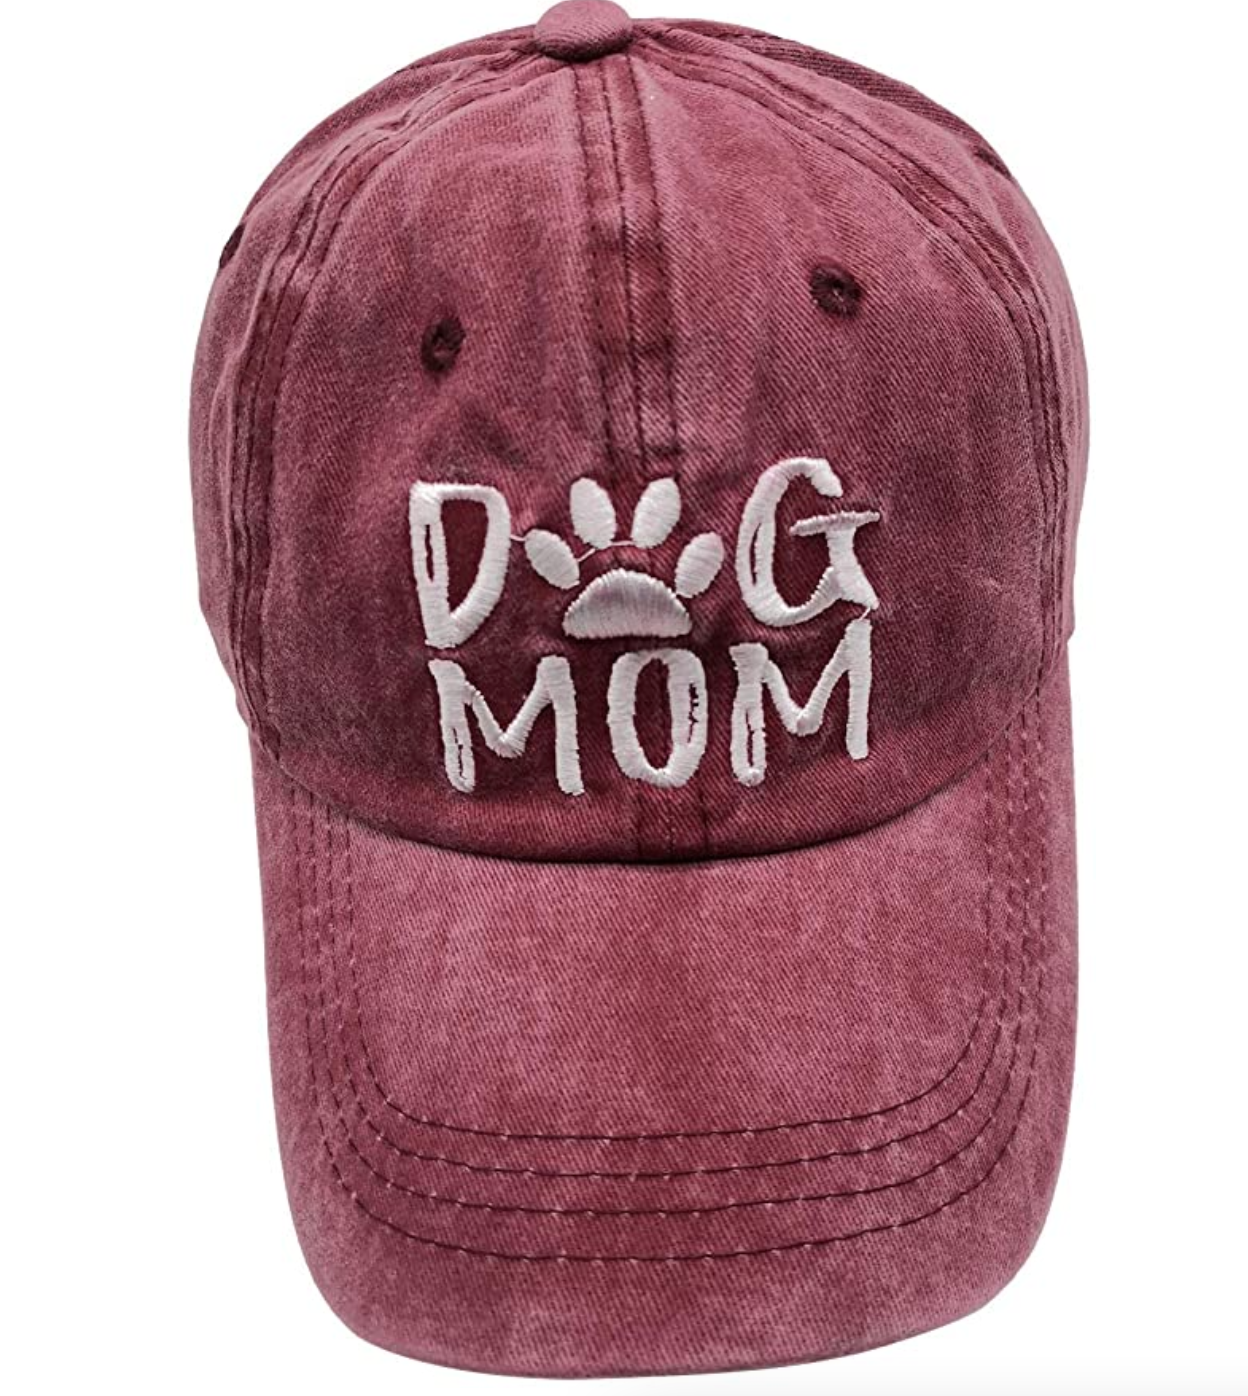 OASCUVER Denim Fabric Adjustable Dog Mom Hat Fashion Distressed Baseball Cap for Women